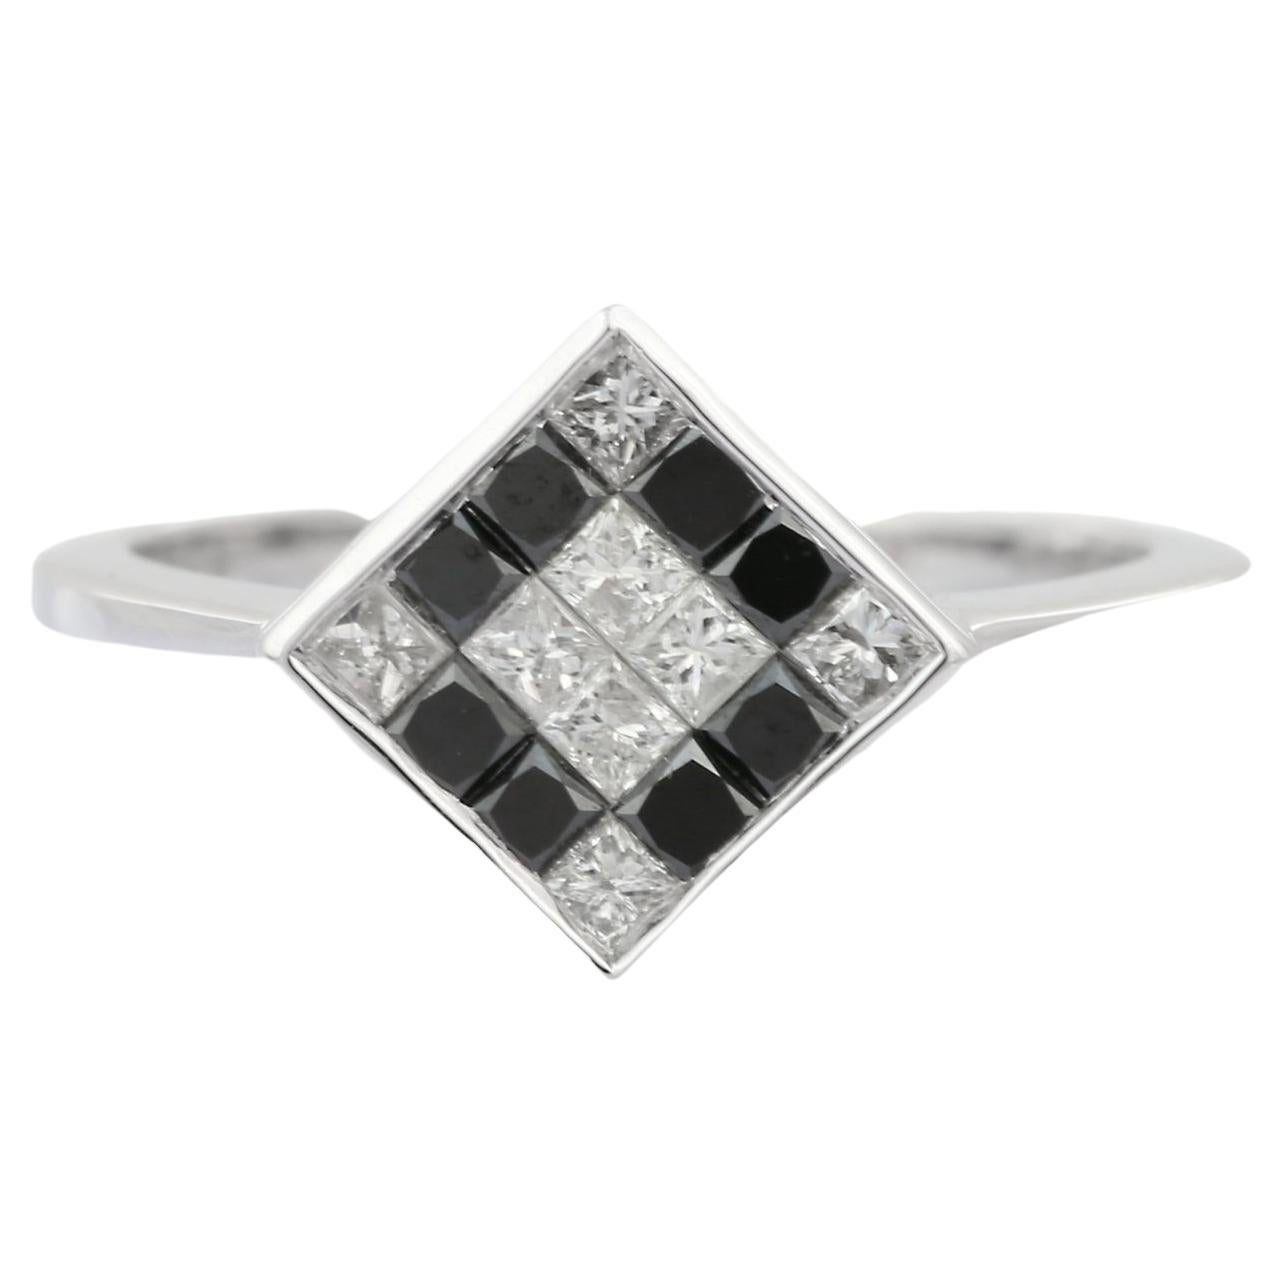 Art Deco Style Black White Diamond Square Ring in 18 Karat White Gold